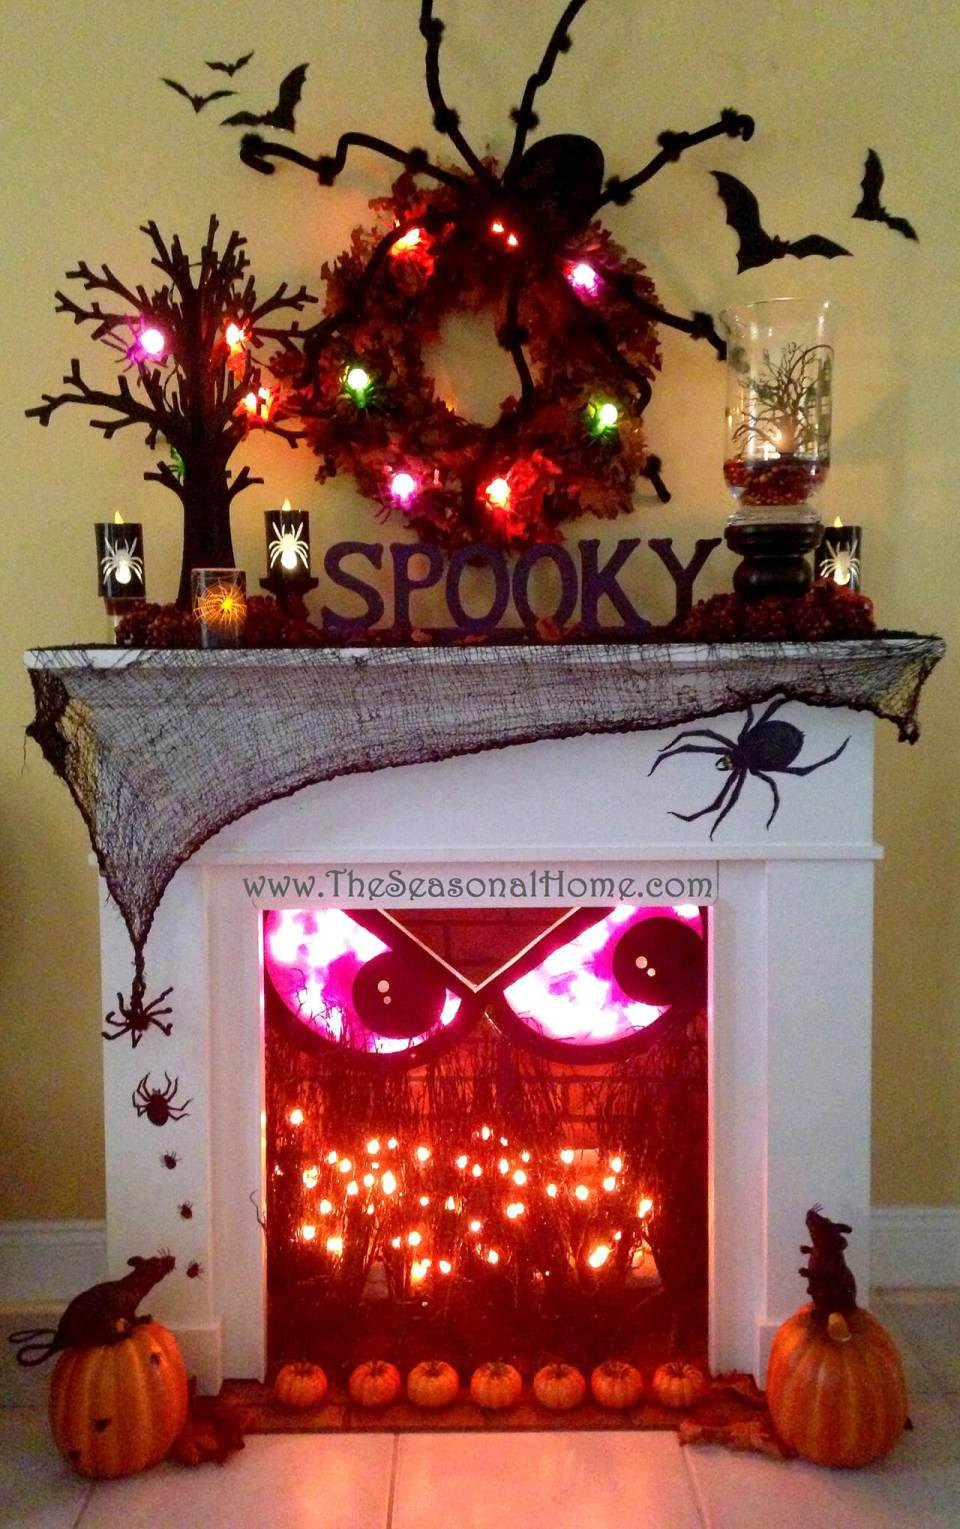 DIY Halloween Decorations Indoor
 51 Spooky DIY Indoor Halloween Decoration Ideas For 2019